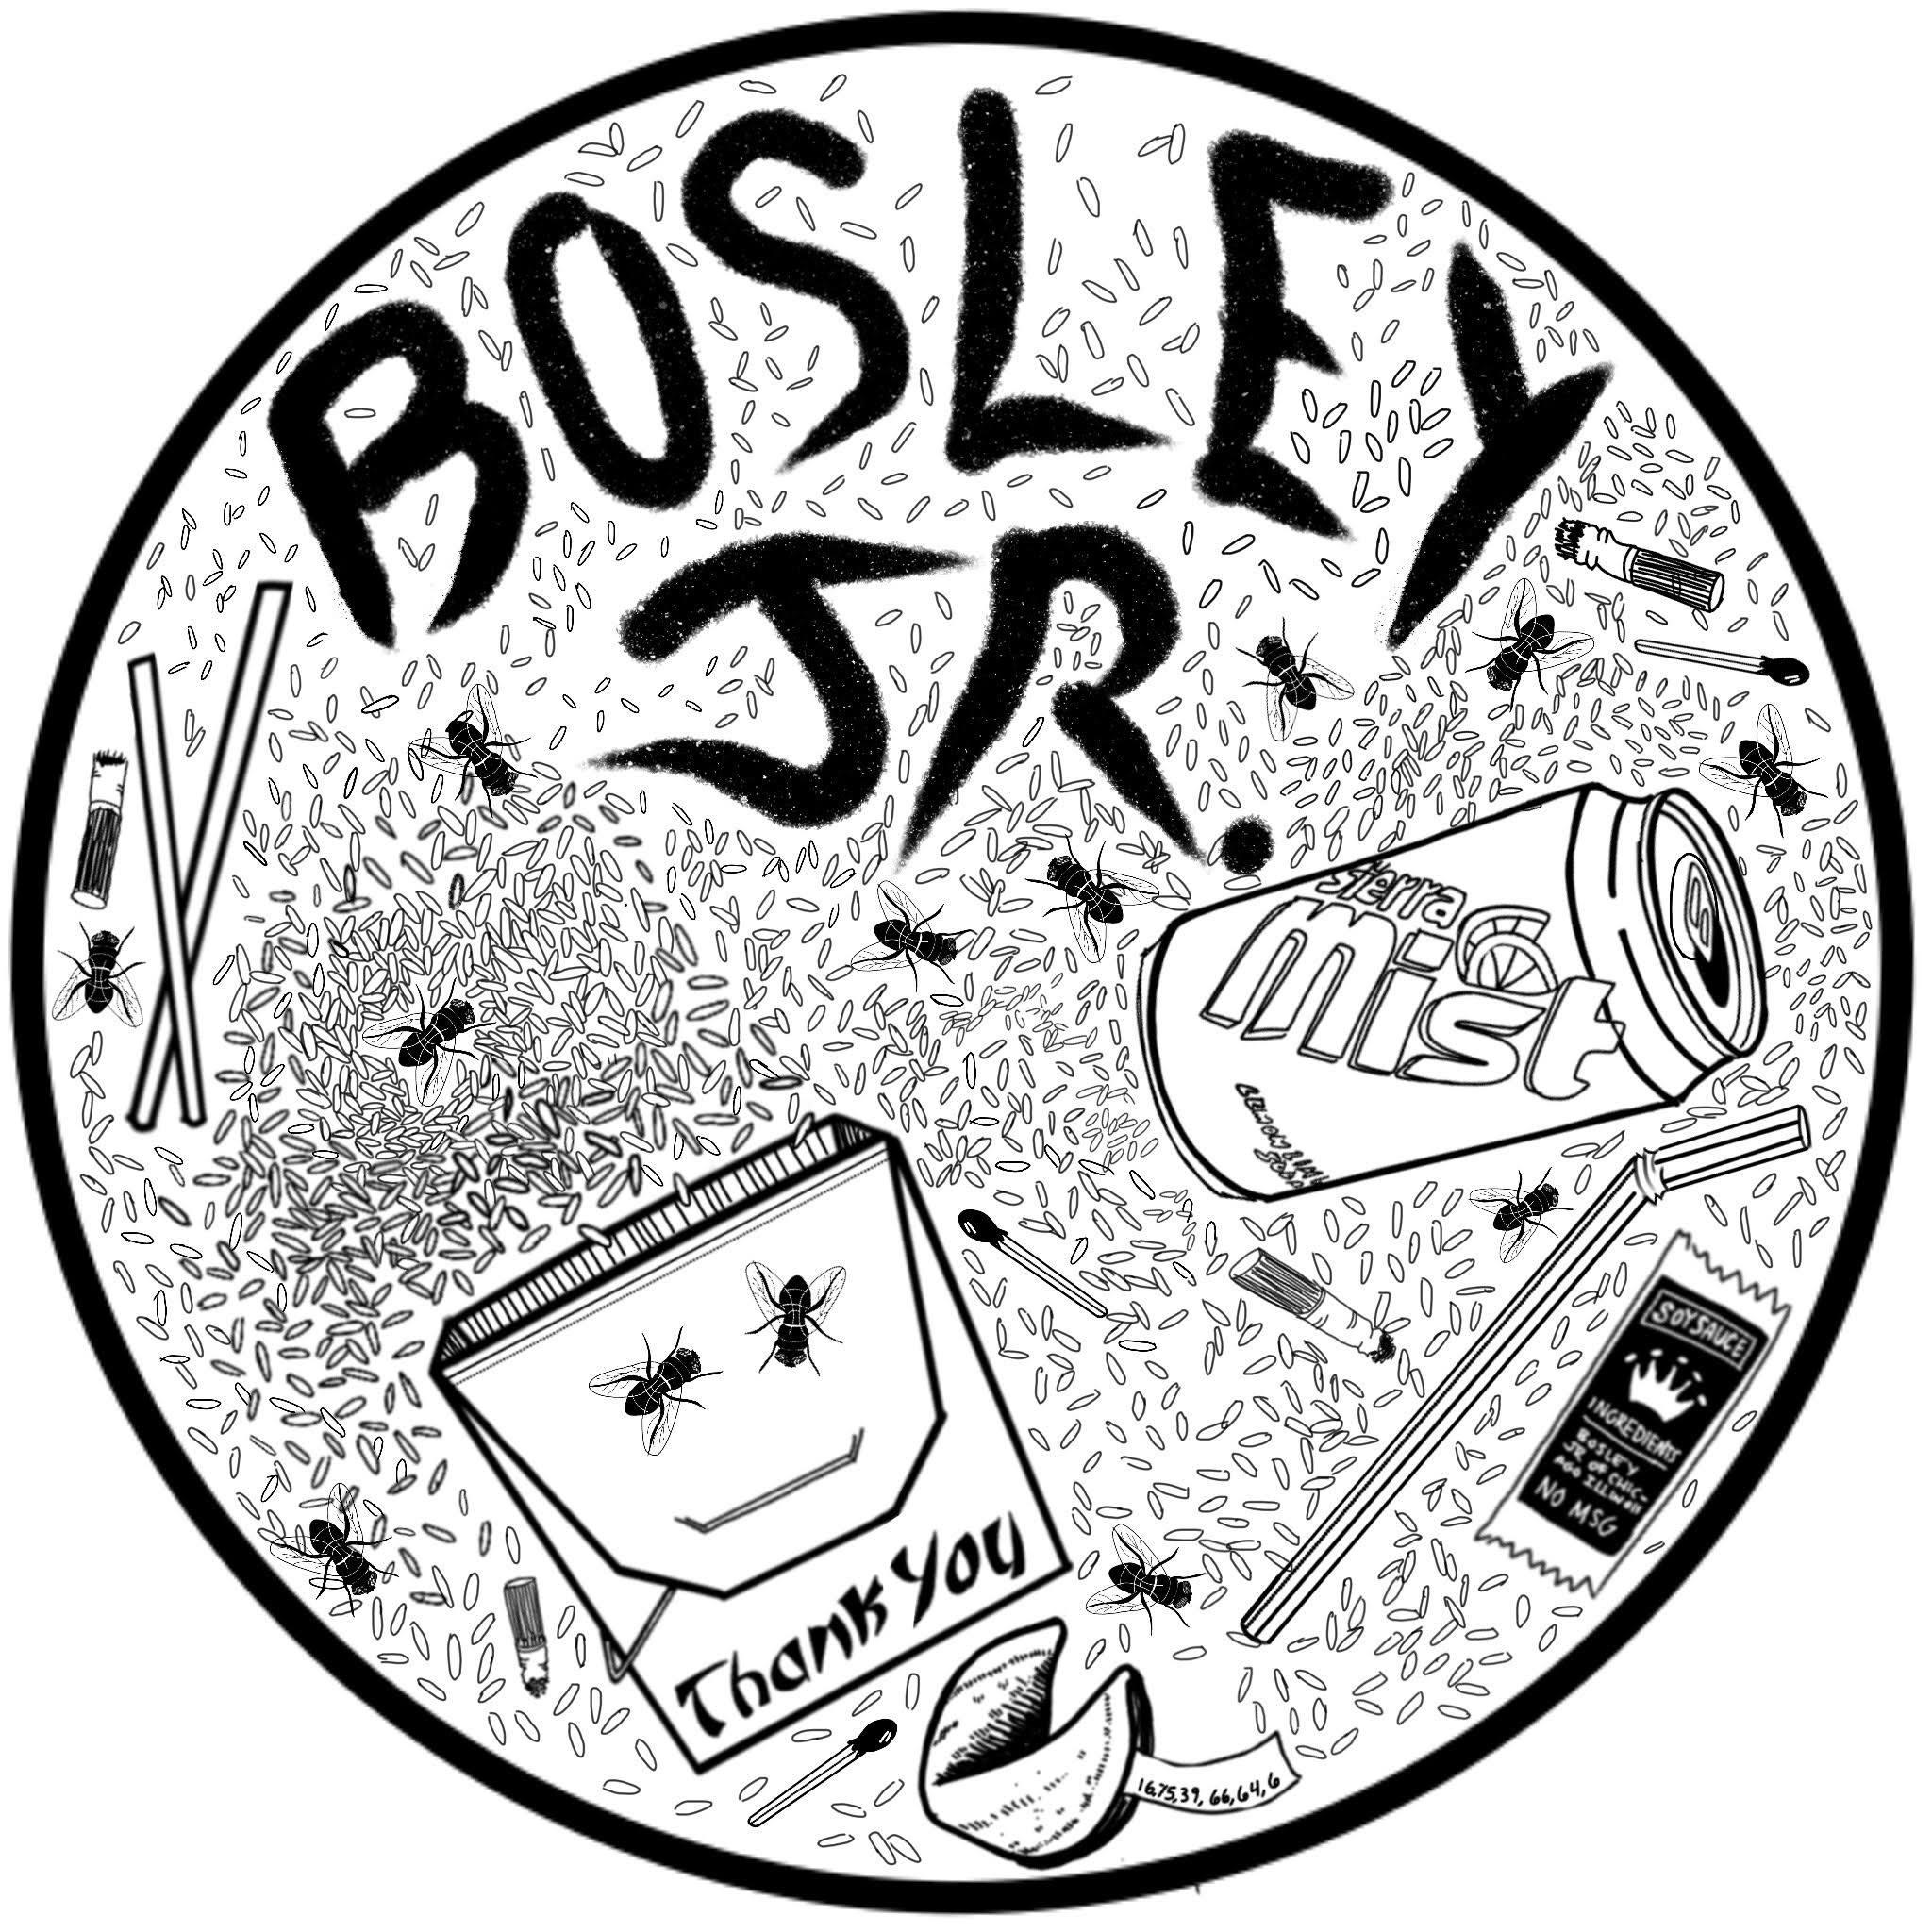 Bosley Jr.